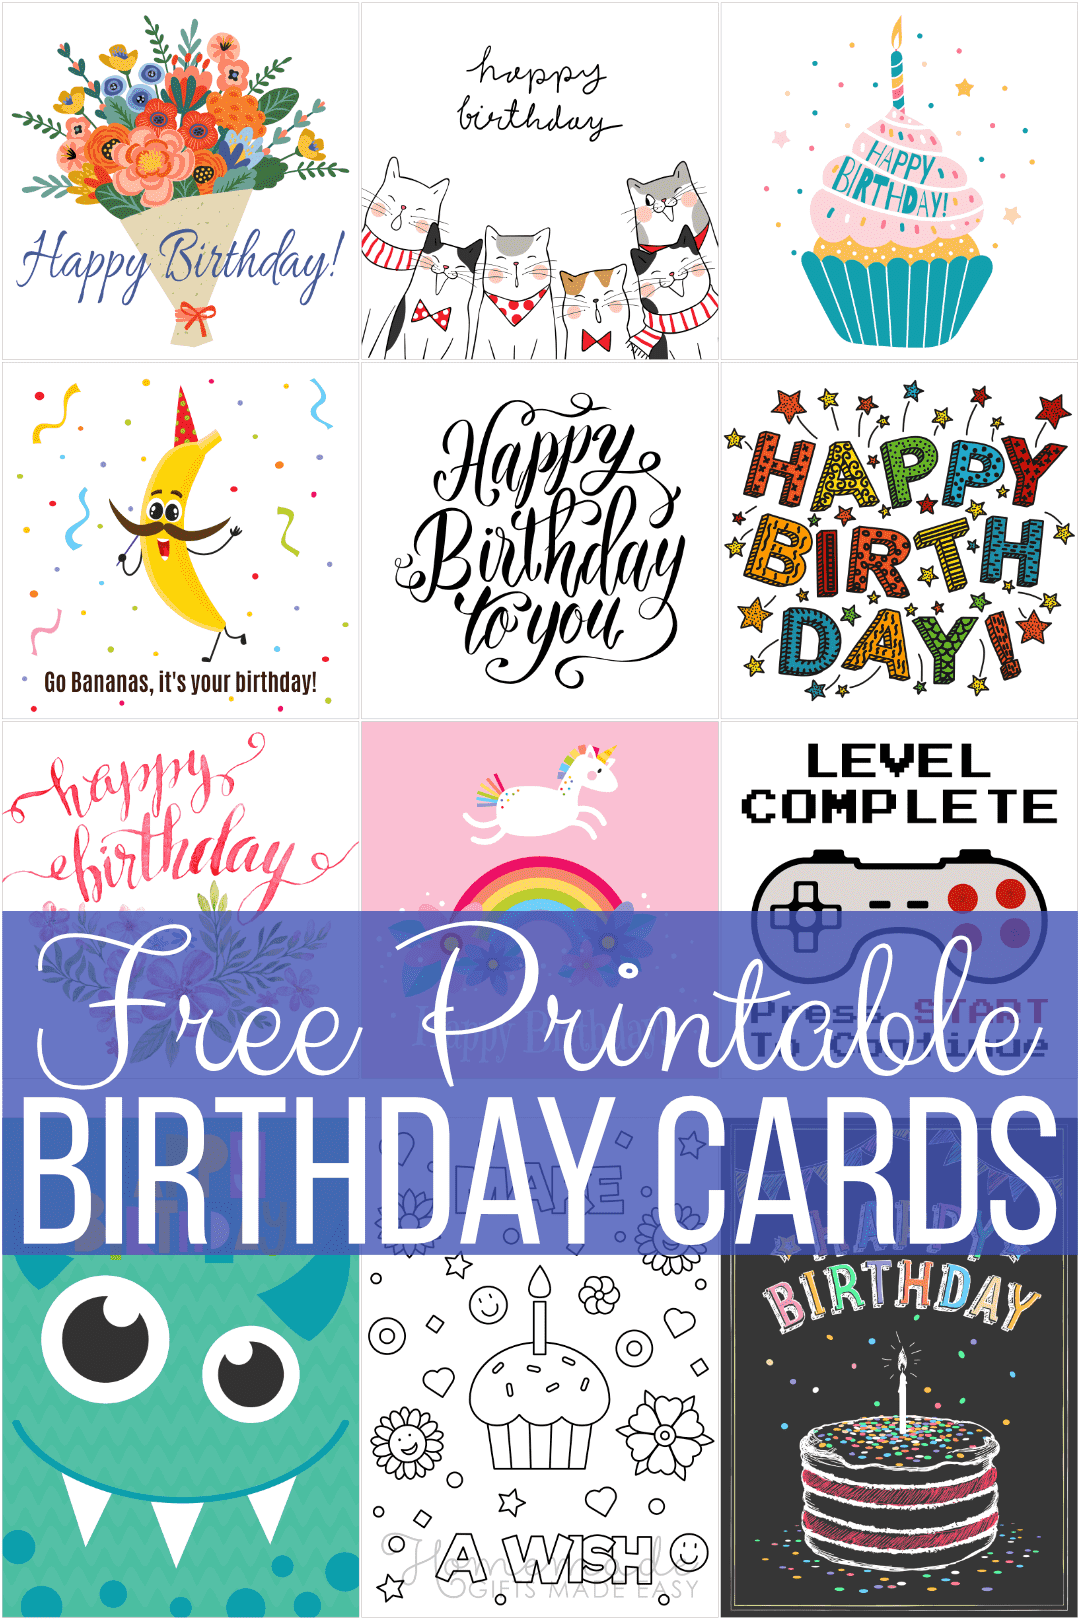 birthday-cards-greeting-cards-paper-birthday-card-happy-birthday